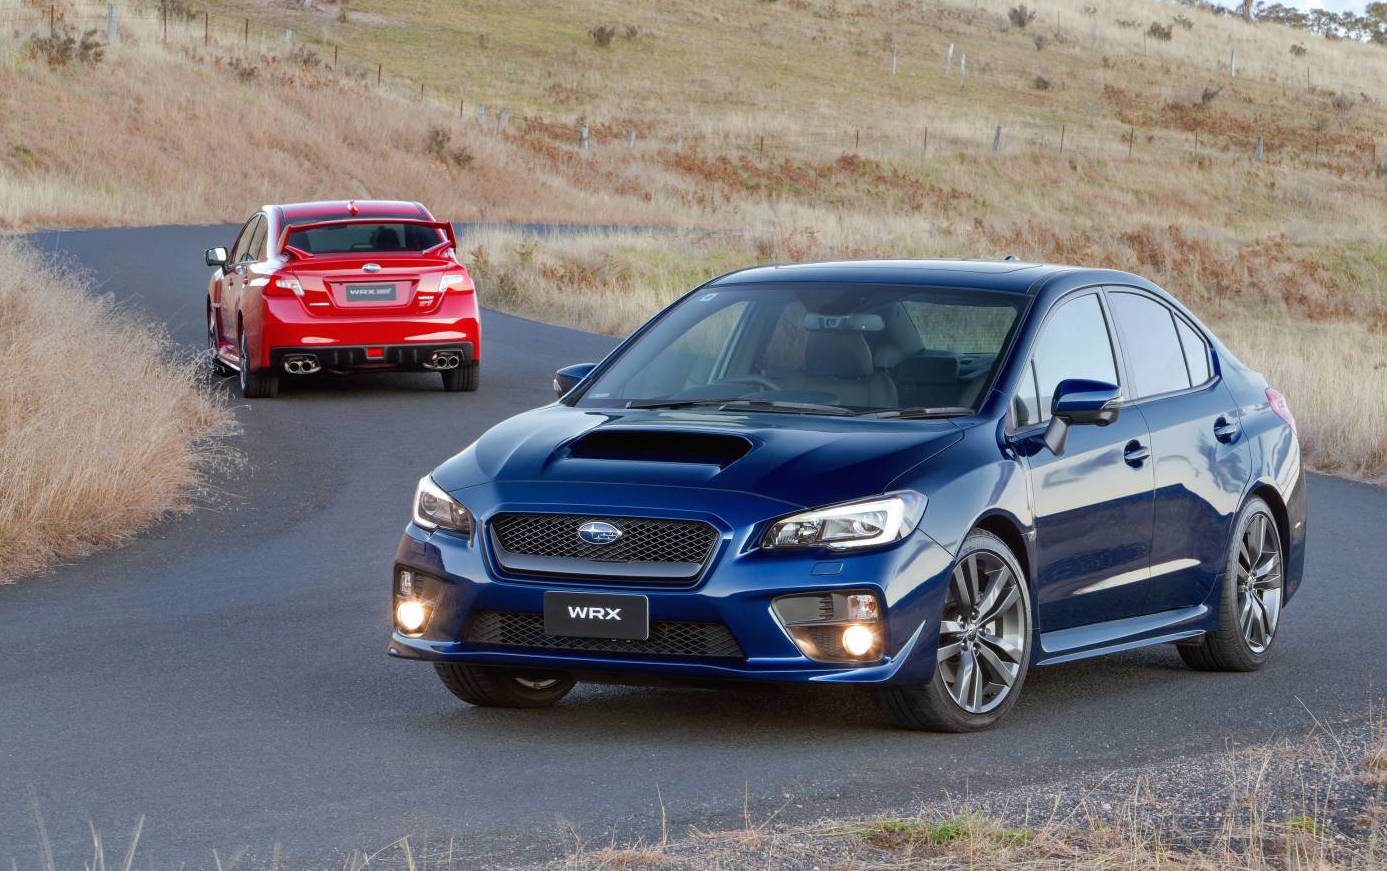 2016 Subaru WRX & STI on sale in Australia from $38,990